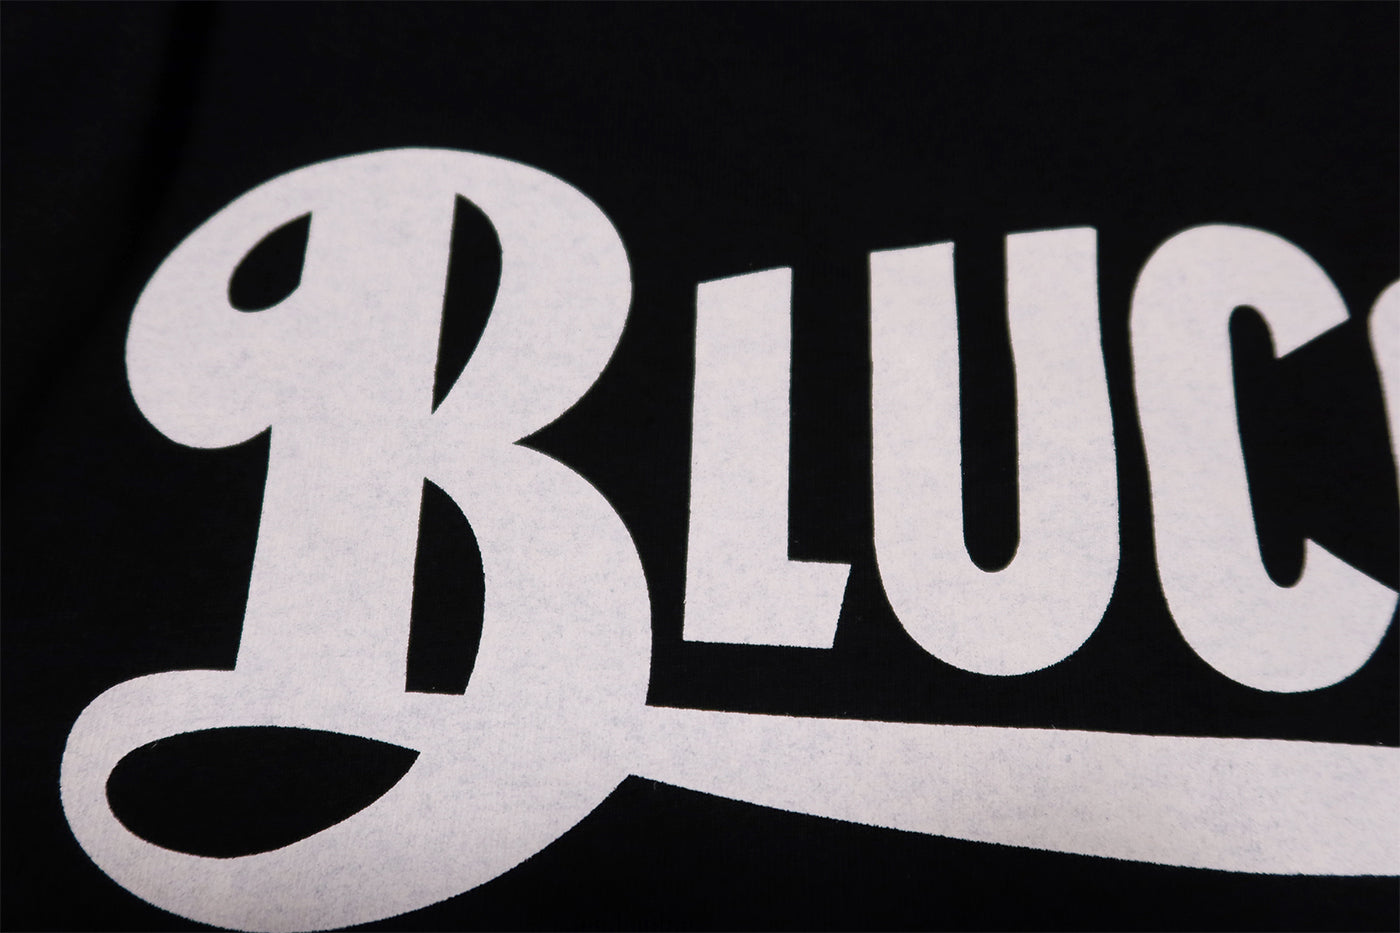 BLUCO T-shirt OLD LOGO logo print men's short sleeve black 143-22-002